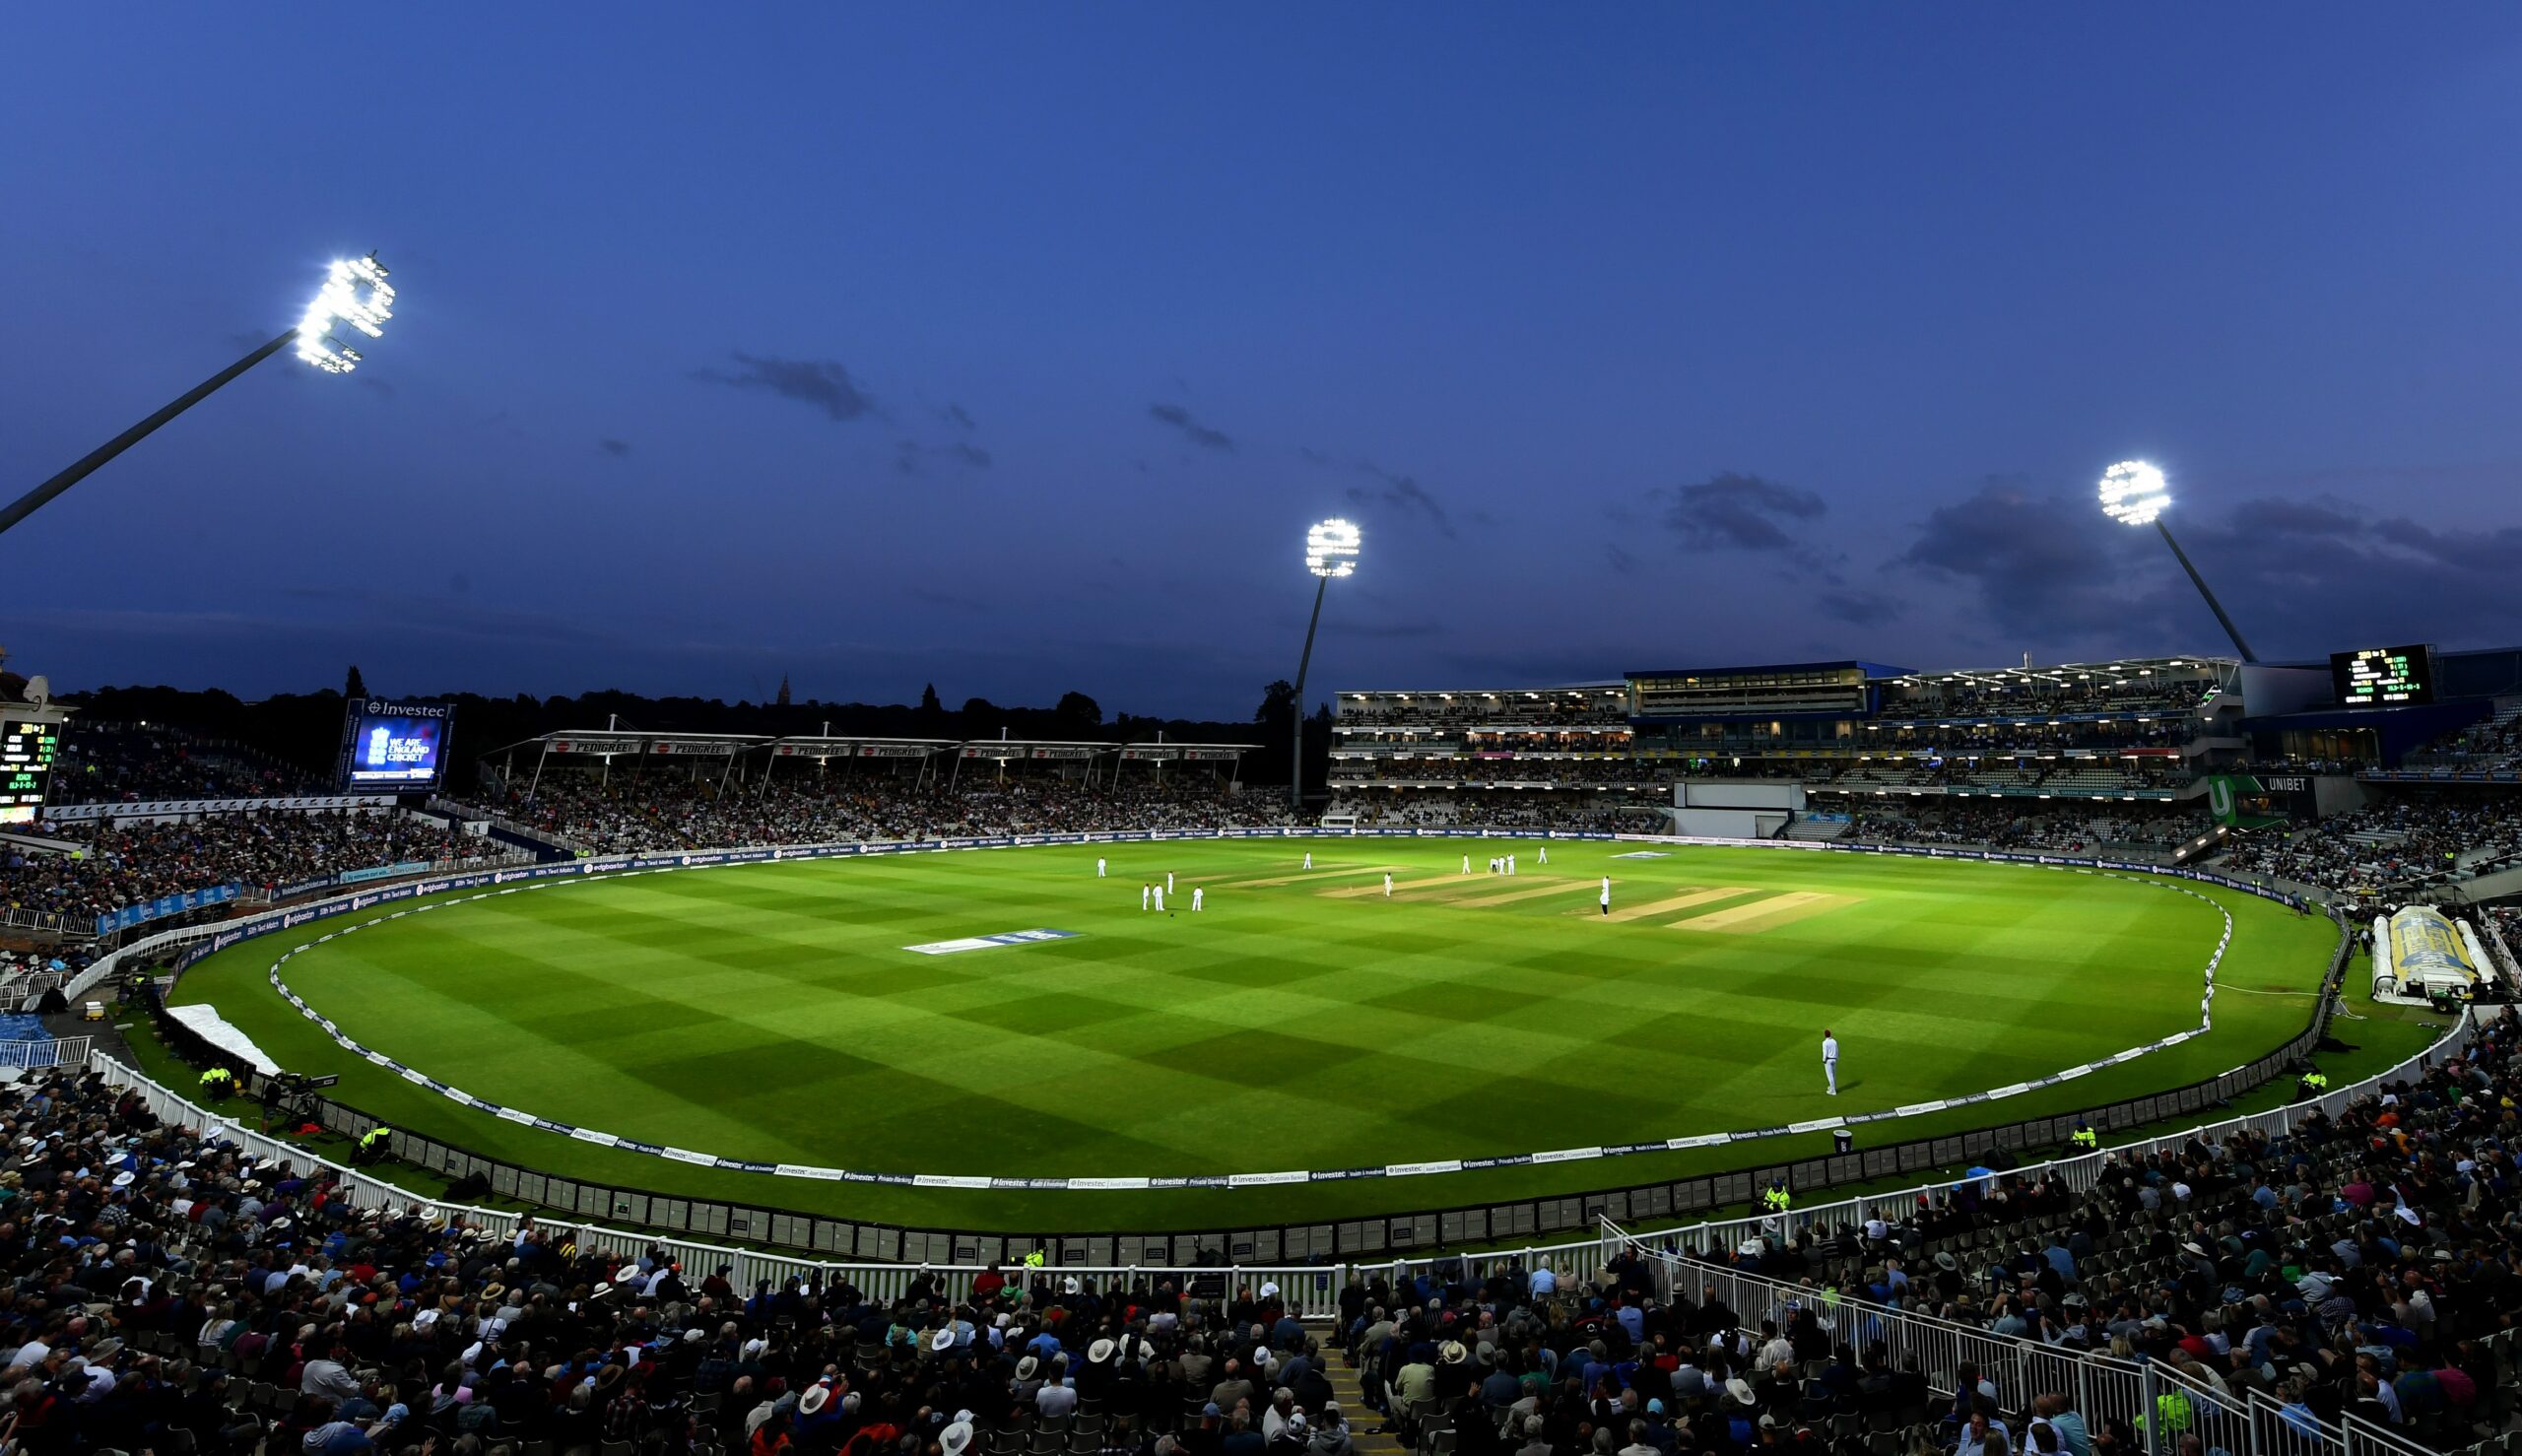 Cricket Stadium Night | Cricket Today